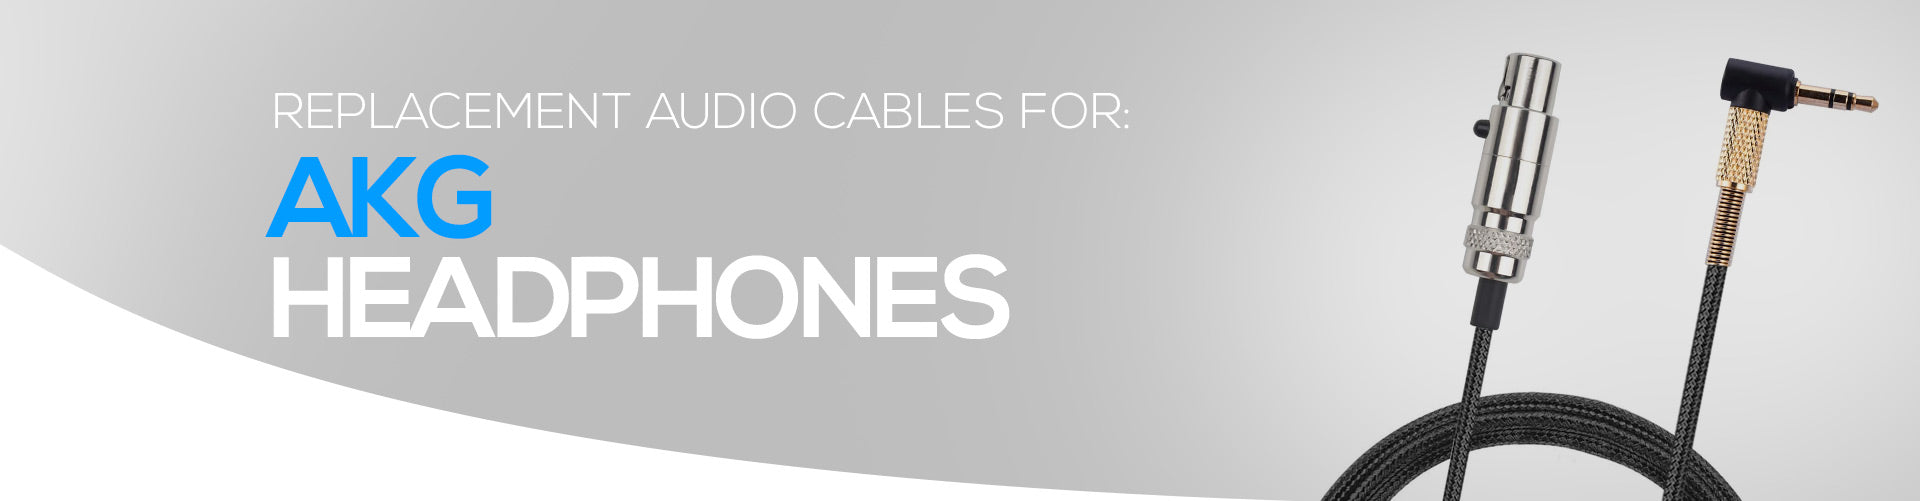 Audio Cables For AKG Headphones